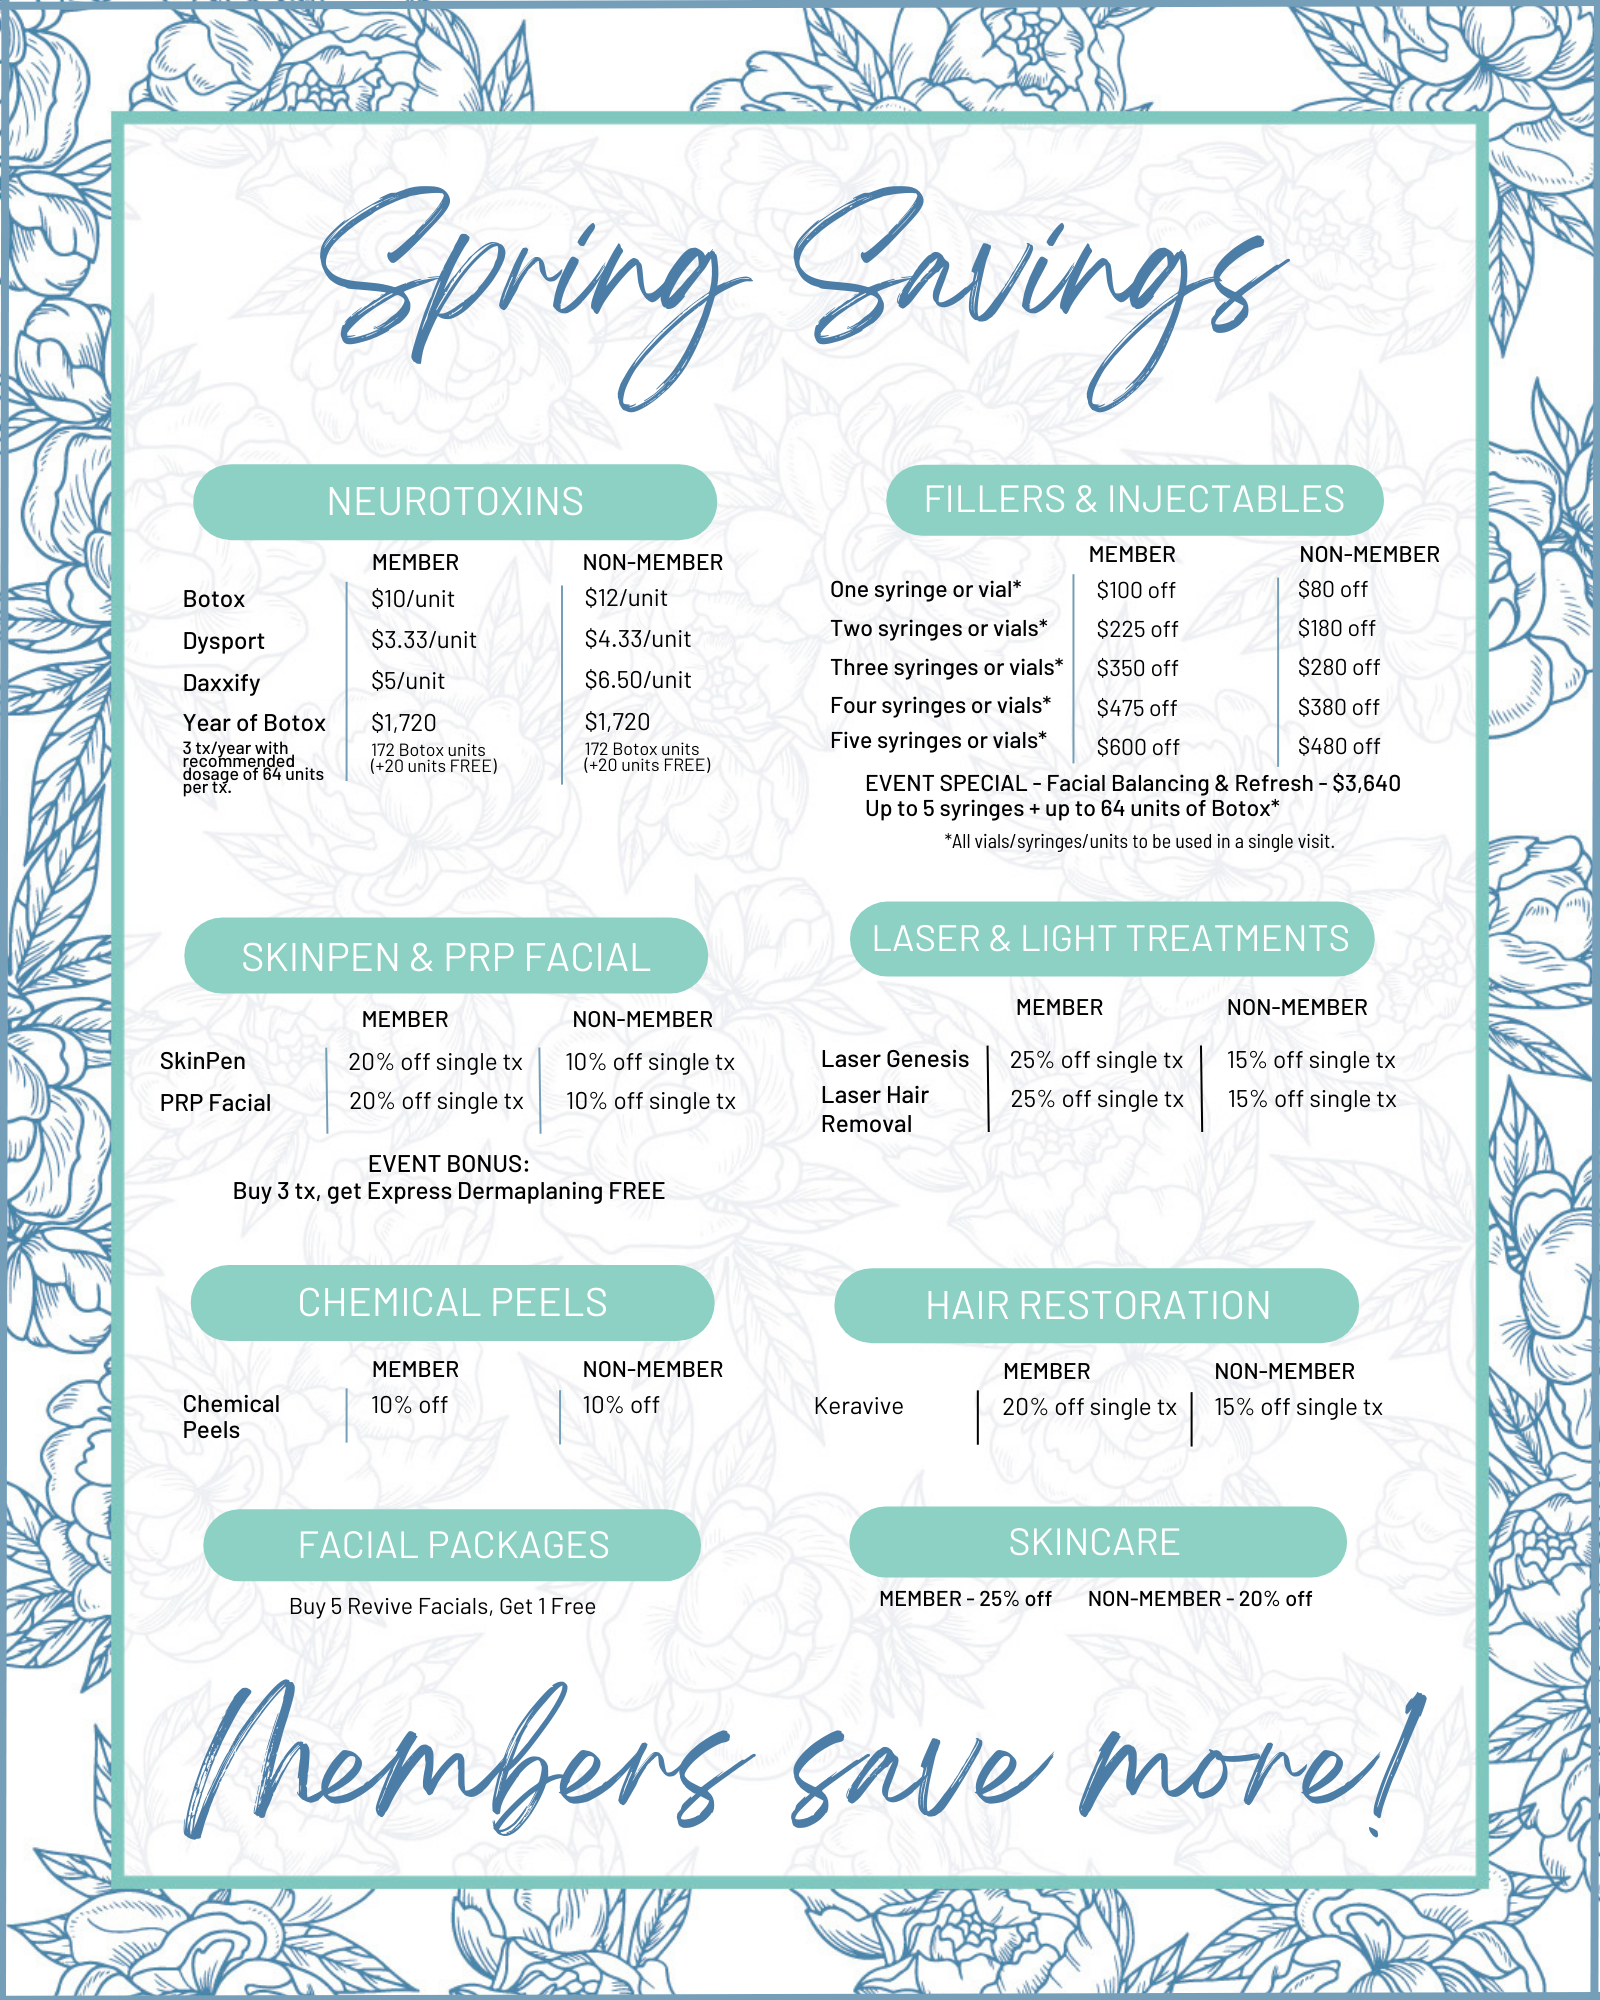 Spring Savings Event Details